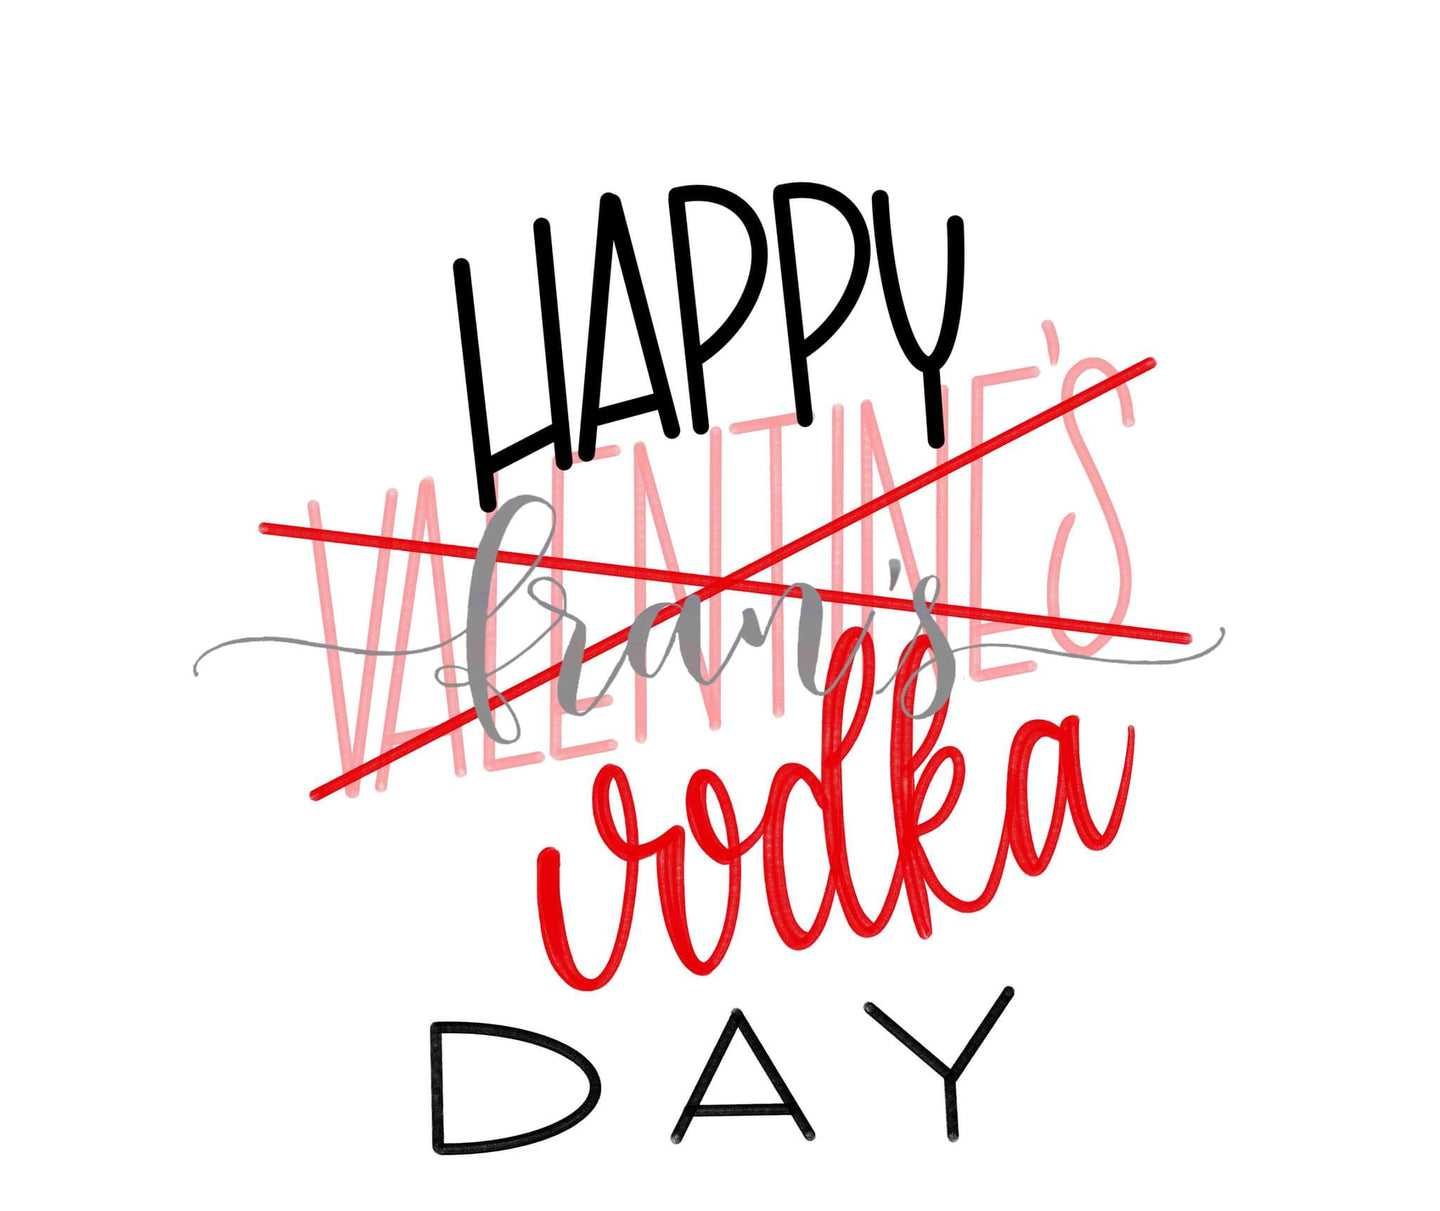 Happy Vodka Day DTF